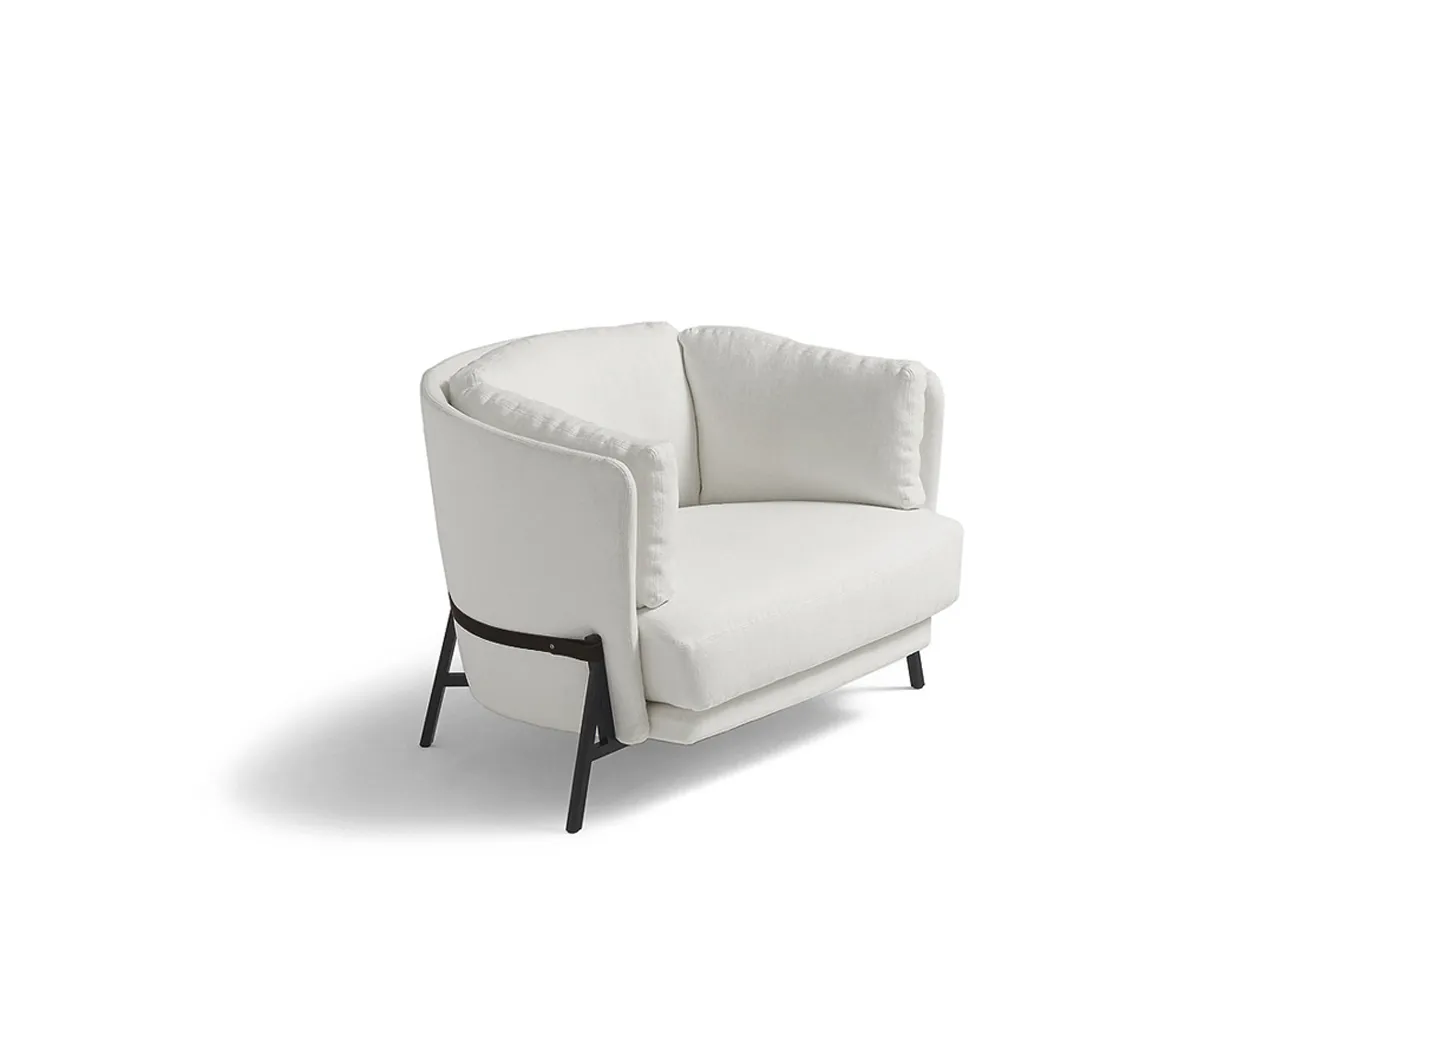 Cradle armchair